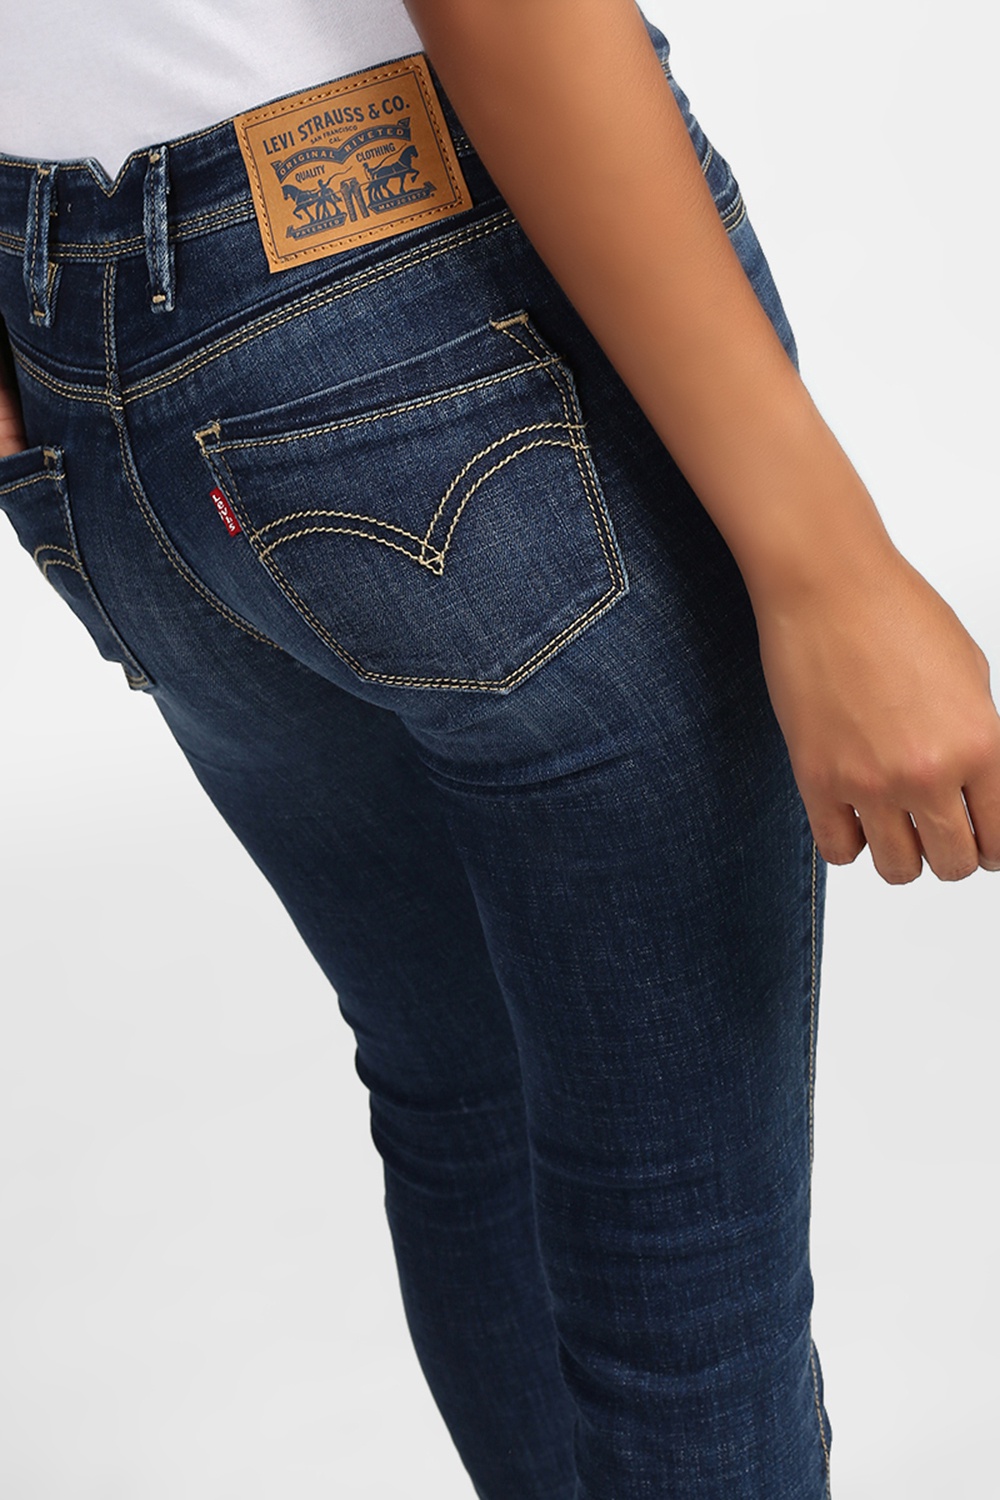 Levi's 711 Skinny Women's Jeans 